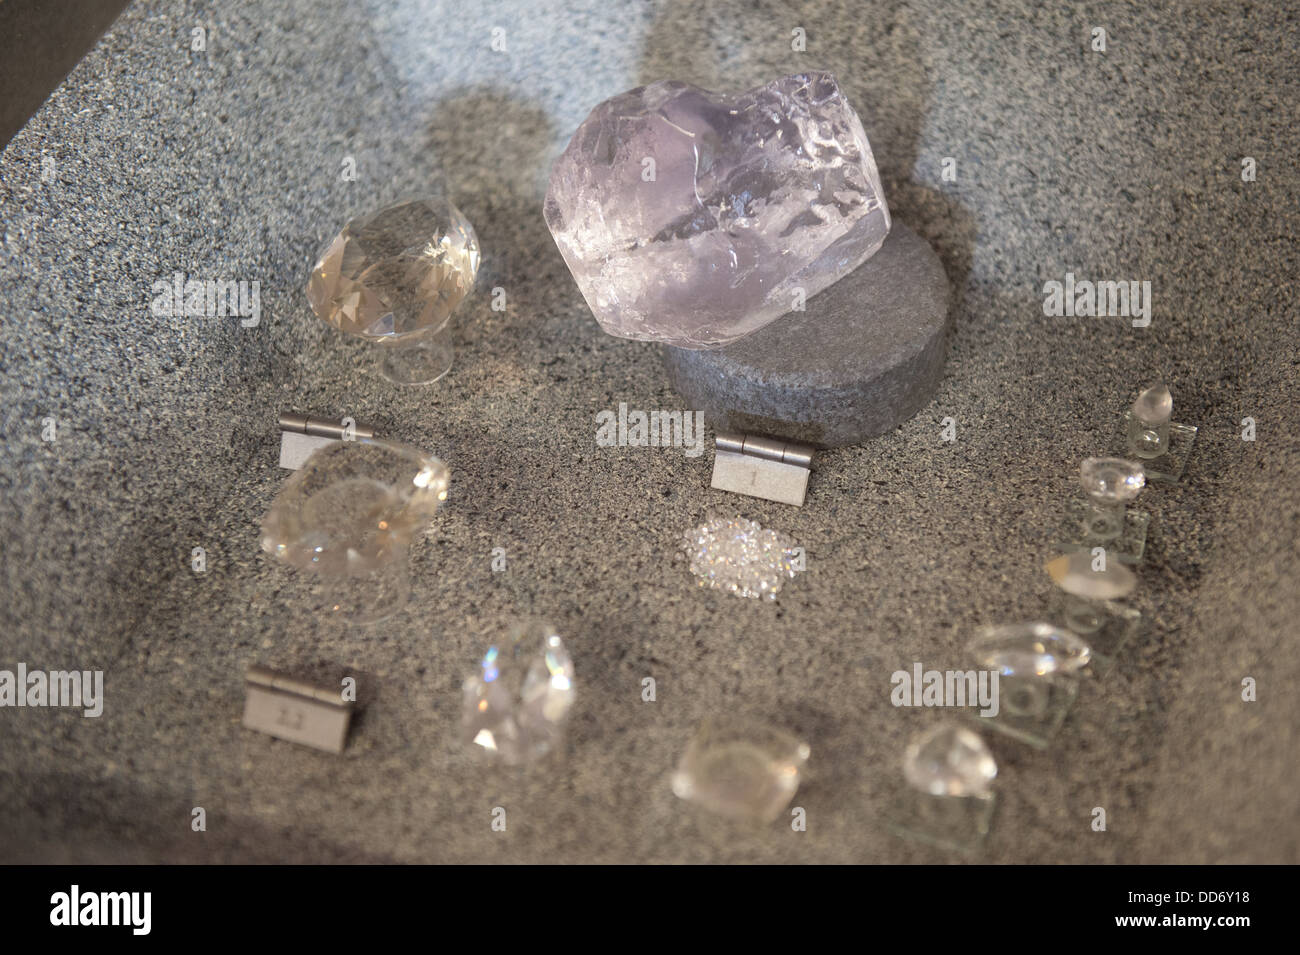 Replica of the cullinan diamond -Fotos und -Bildmaterial in hoher Auflösung  – Alamy